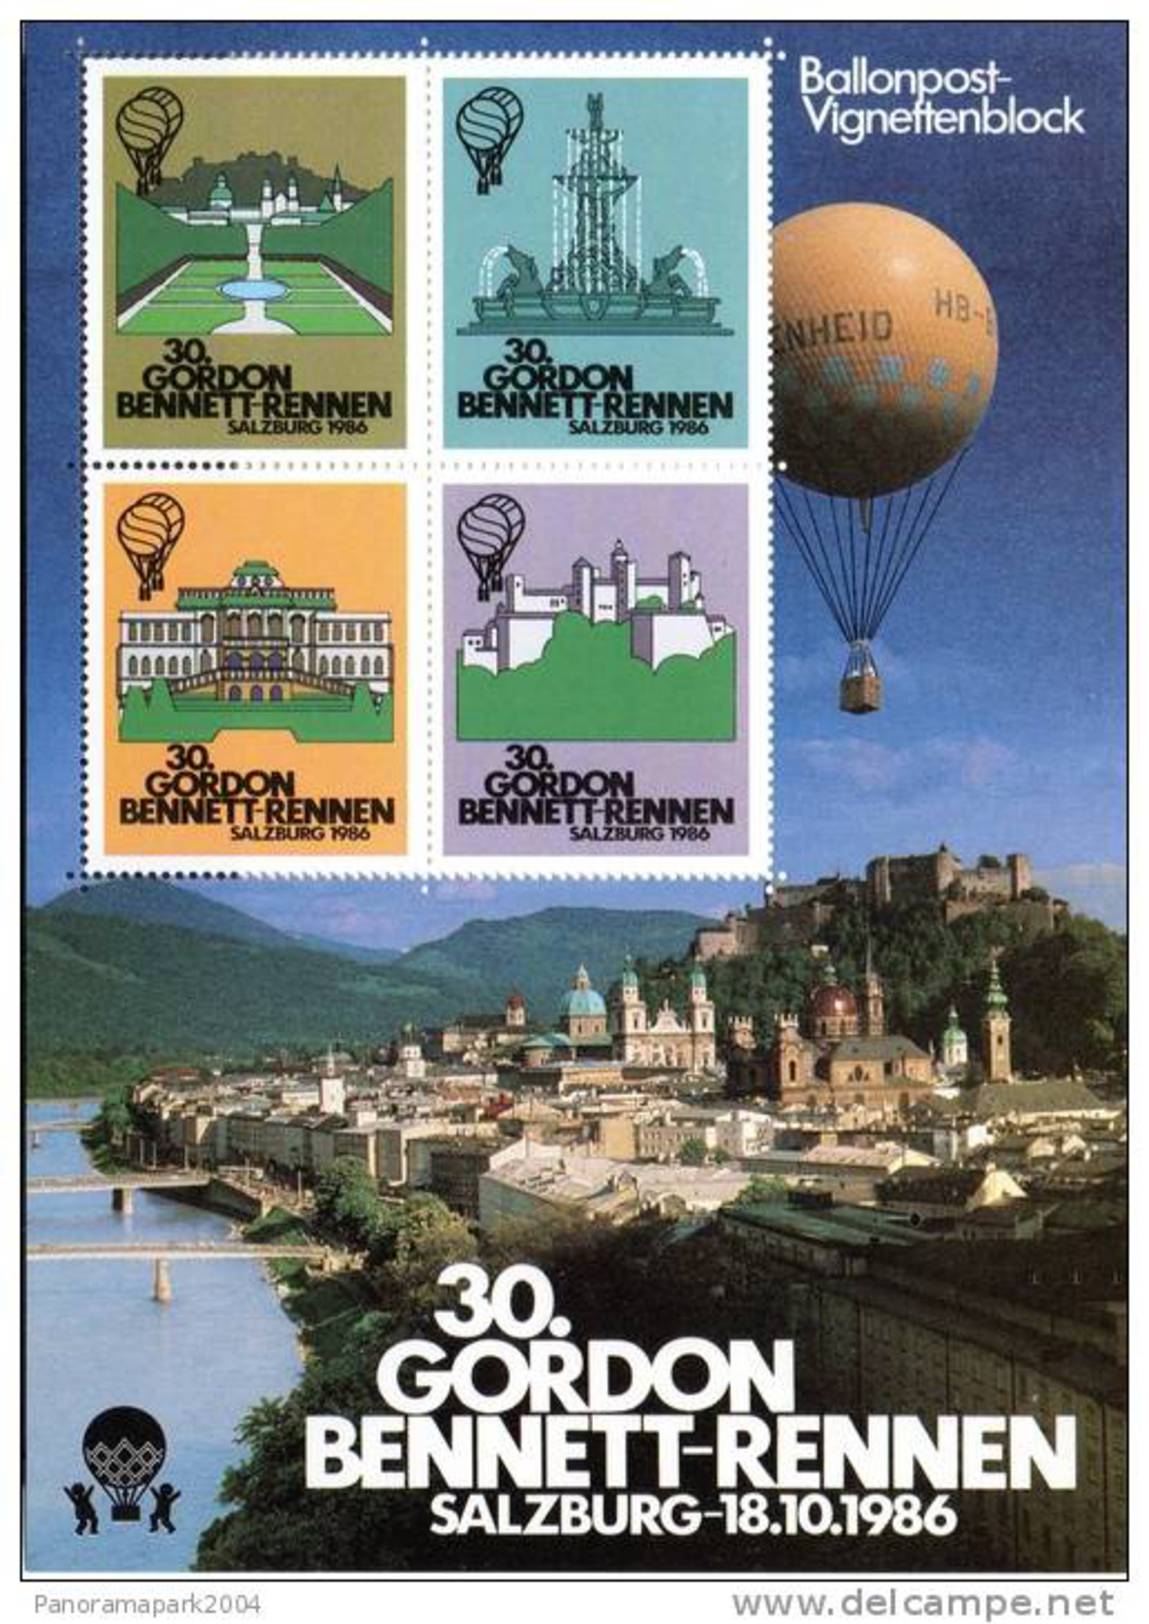 30. Gordon Bennett Rennen Salzburg 18.10.1986 Österreich Vignettenblock Ballonpost Heißluftballon - Per Palloni